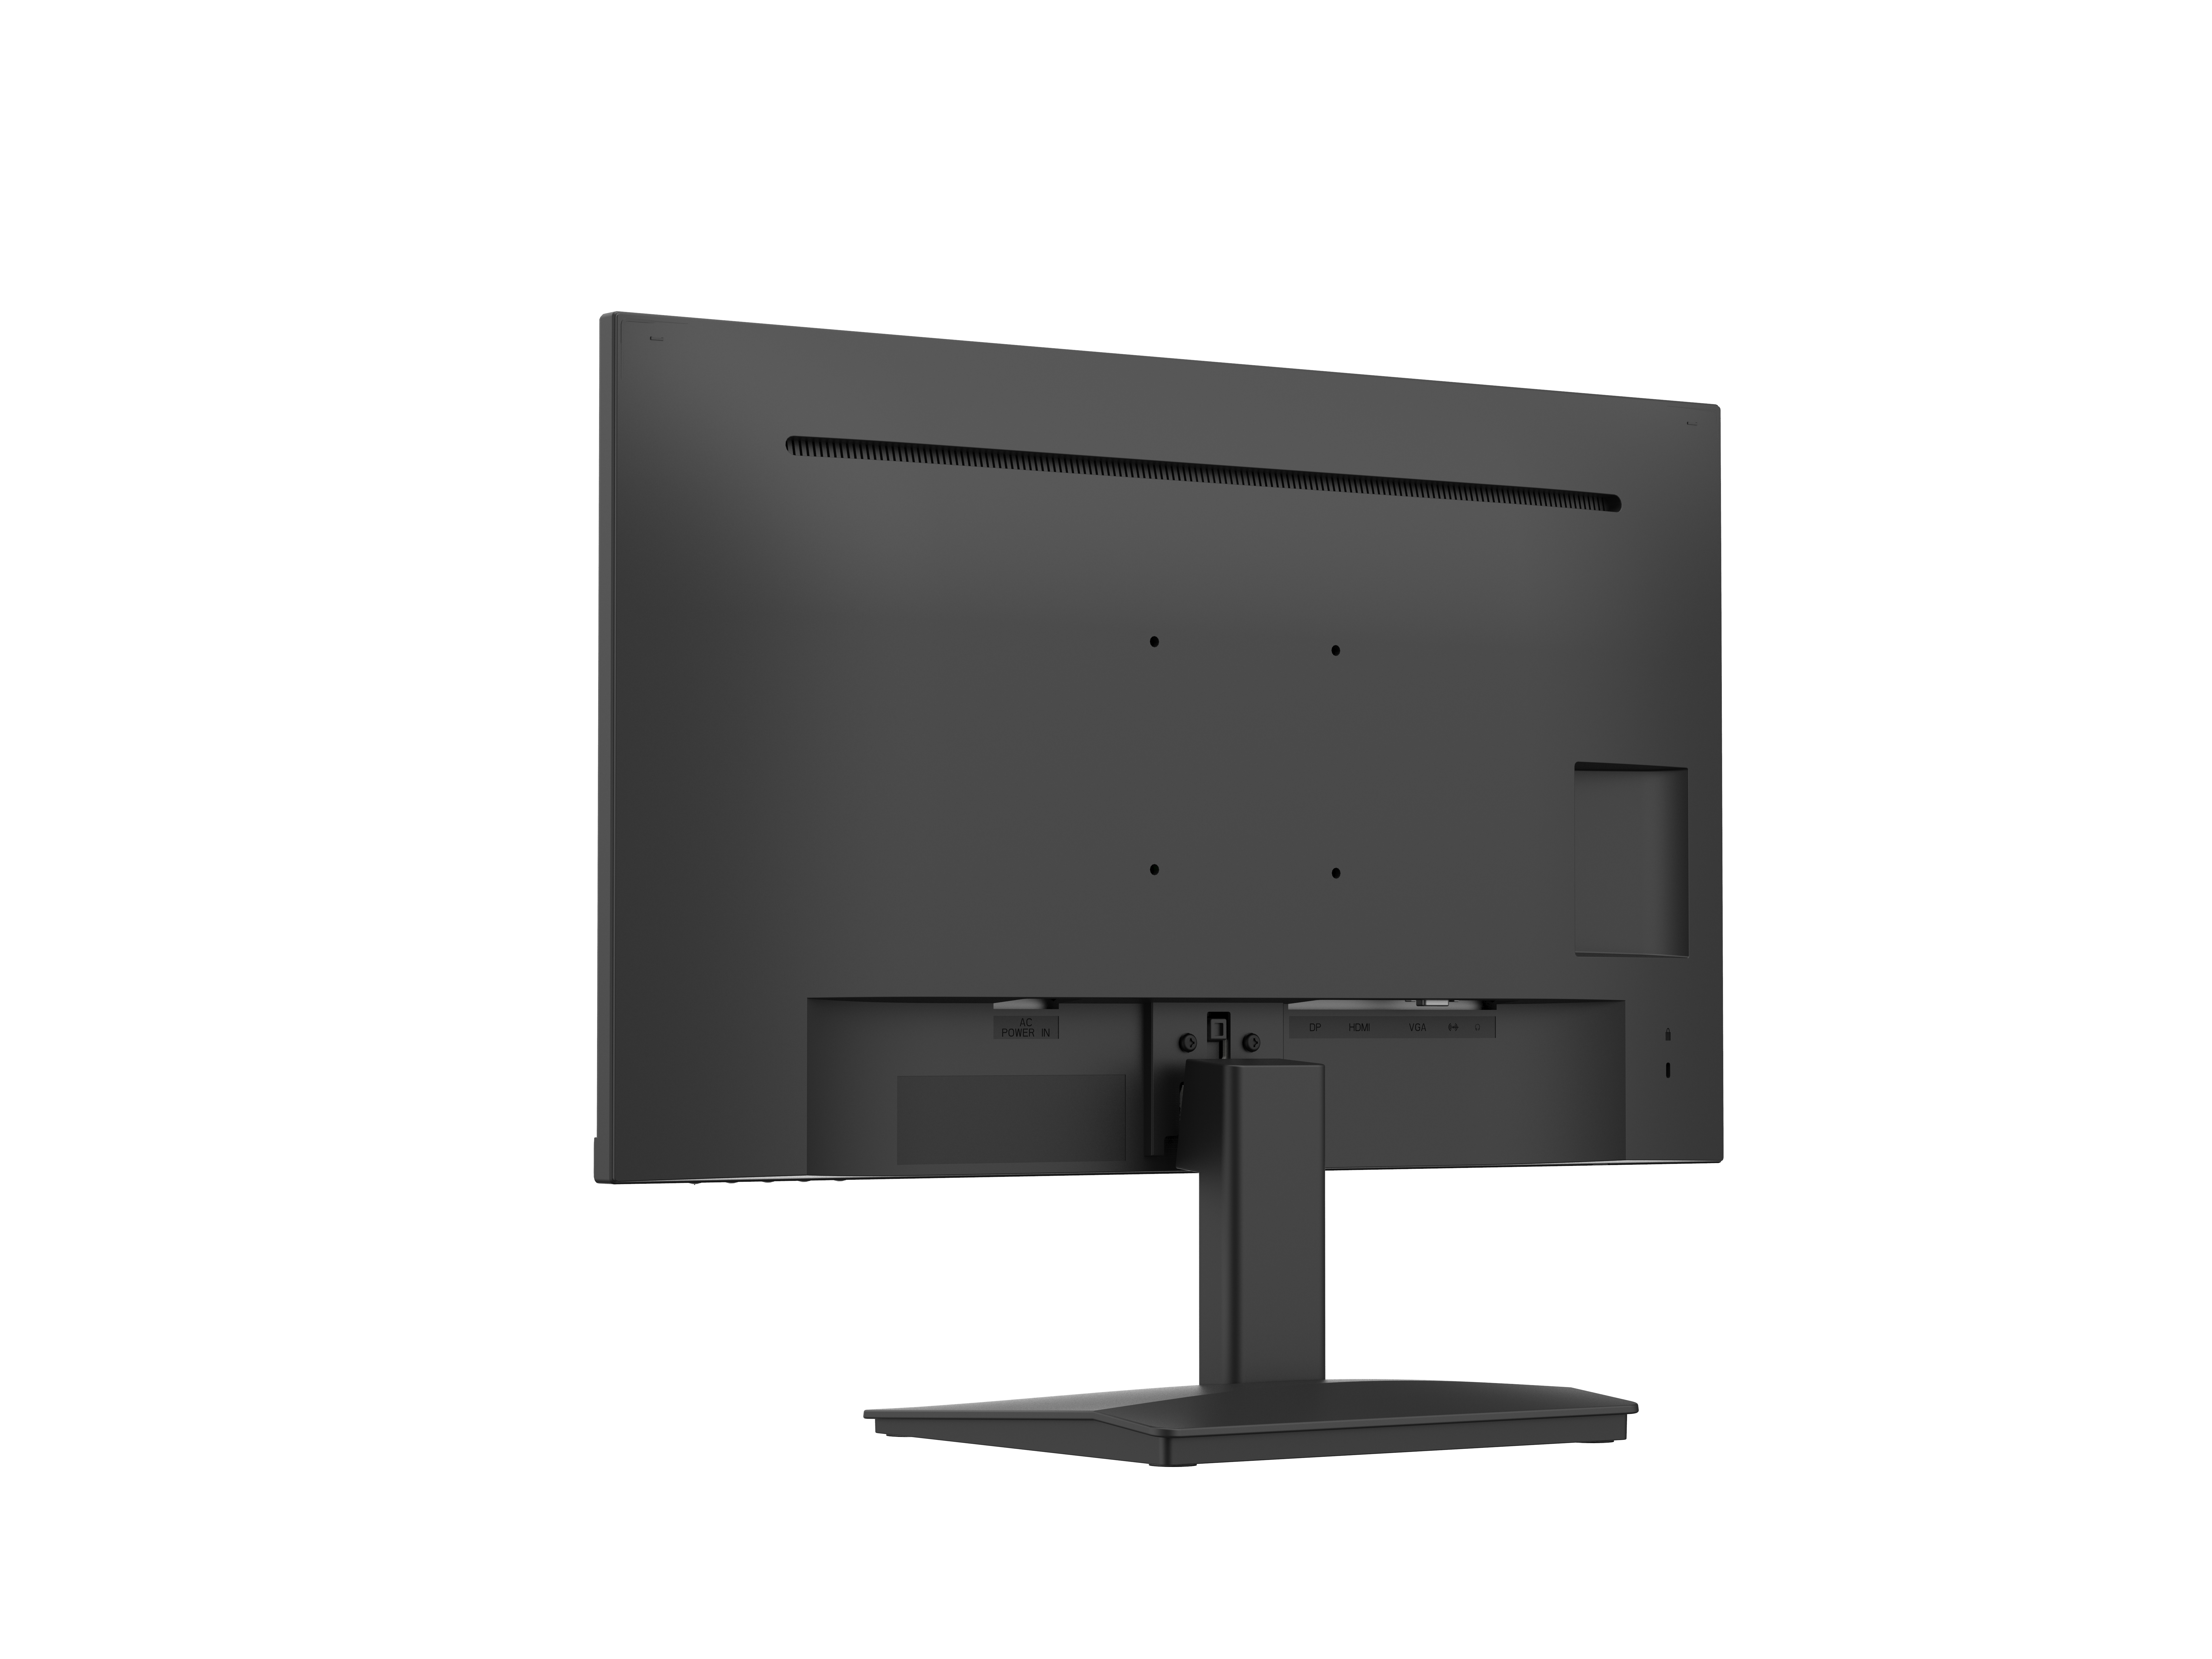 Iiyama ProLite XU2793HSU-B4 | 27" (68,5cm) | rahmenlosen Design für Multi-Monitor-Setups